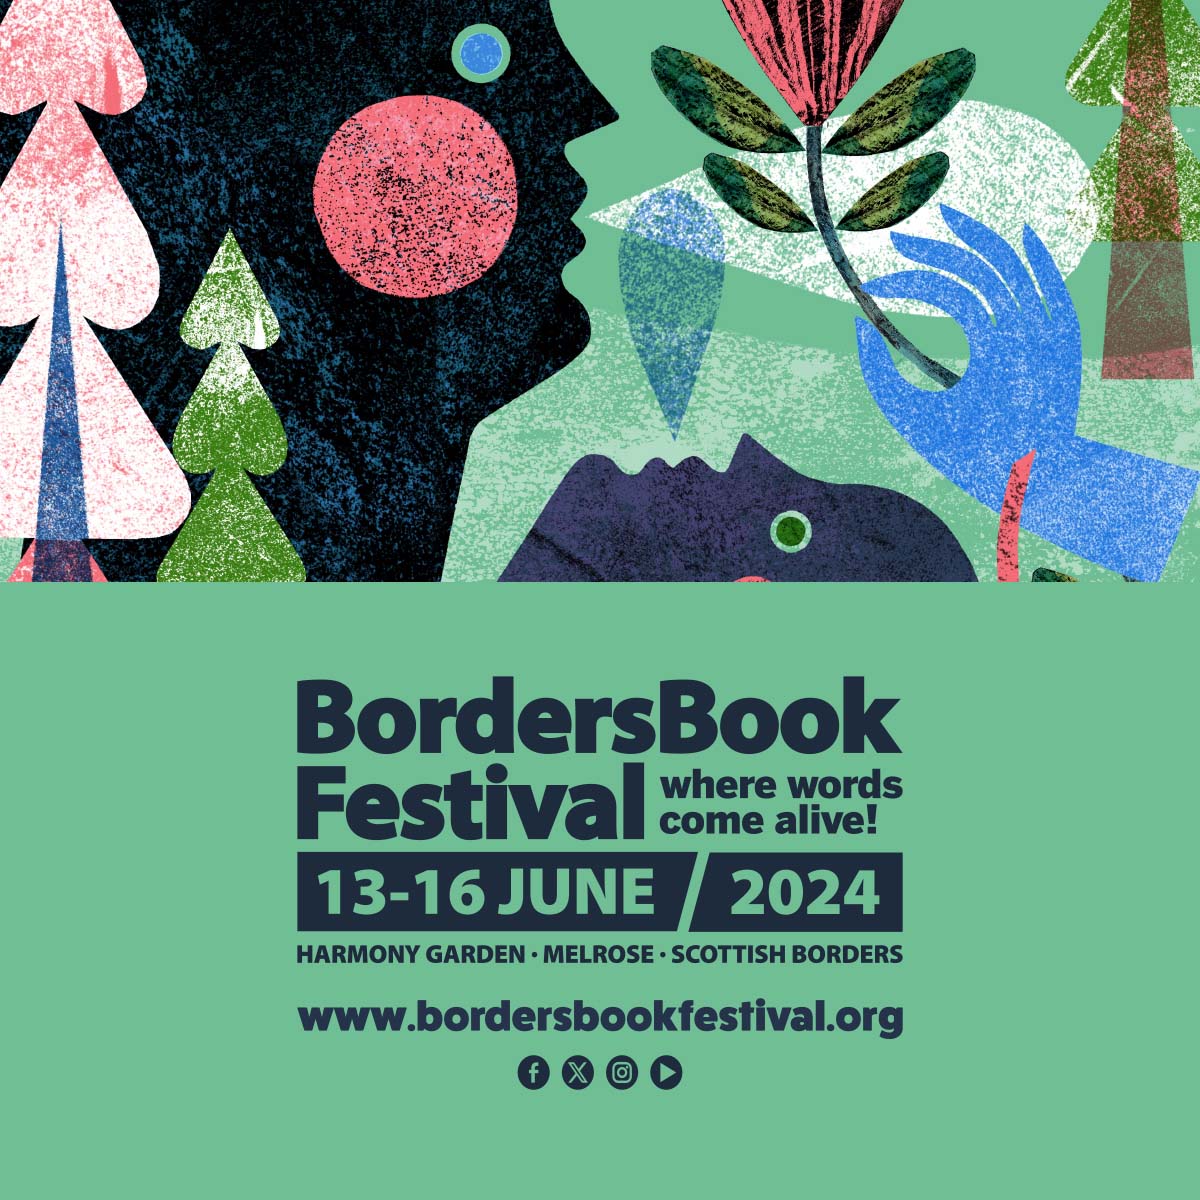 Borders Book Festival. Where words come alive. 13-16 June 2024. Harmony Garden Melrose Scottish Borders. www.bordersbookfestival.org.